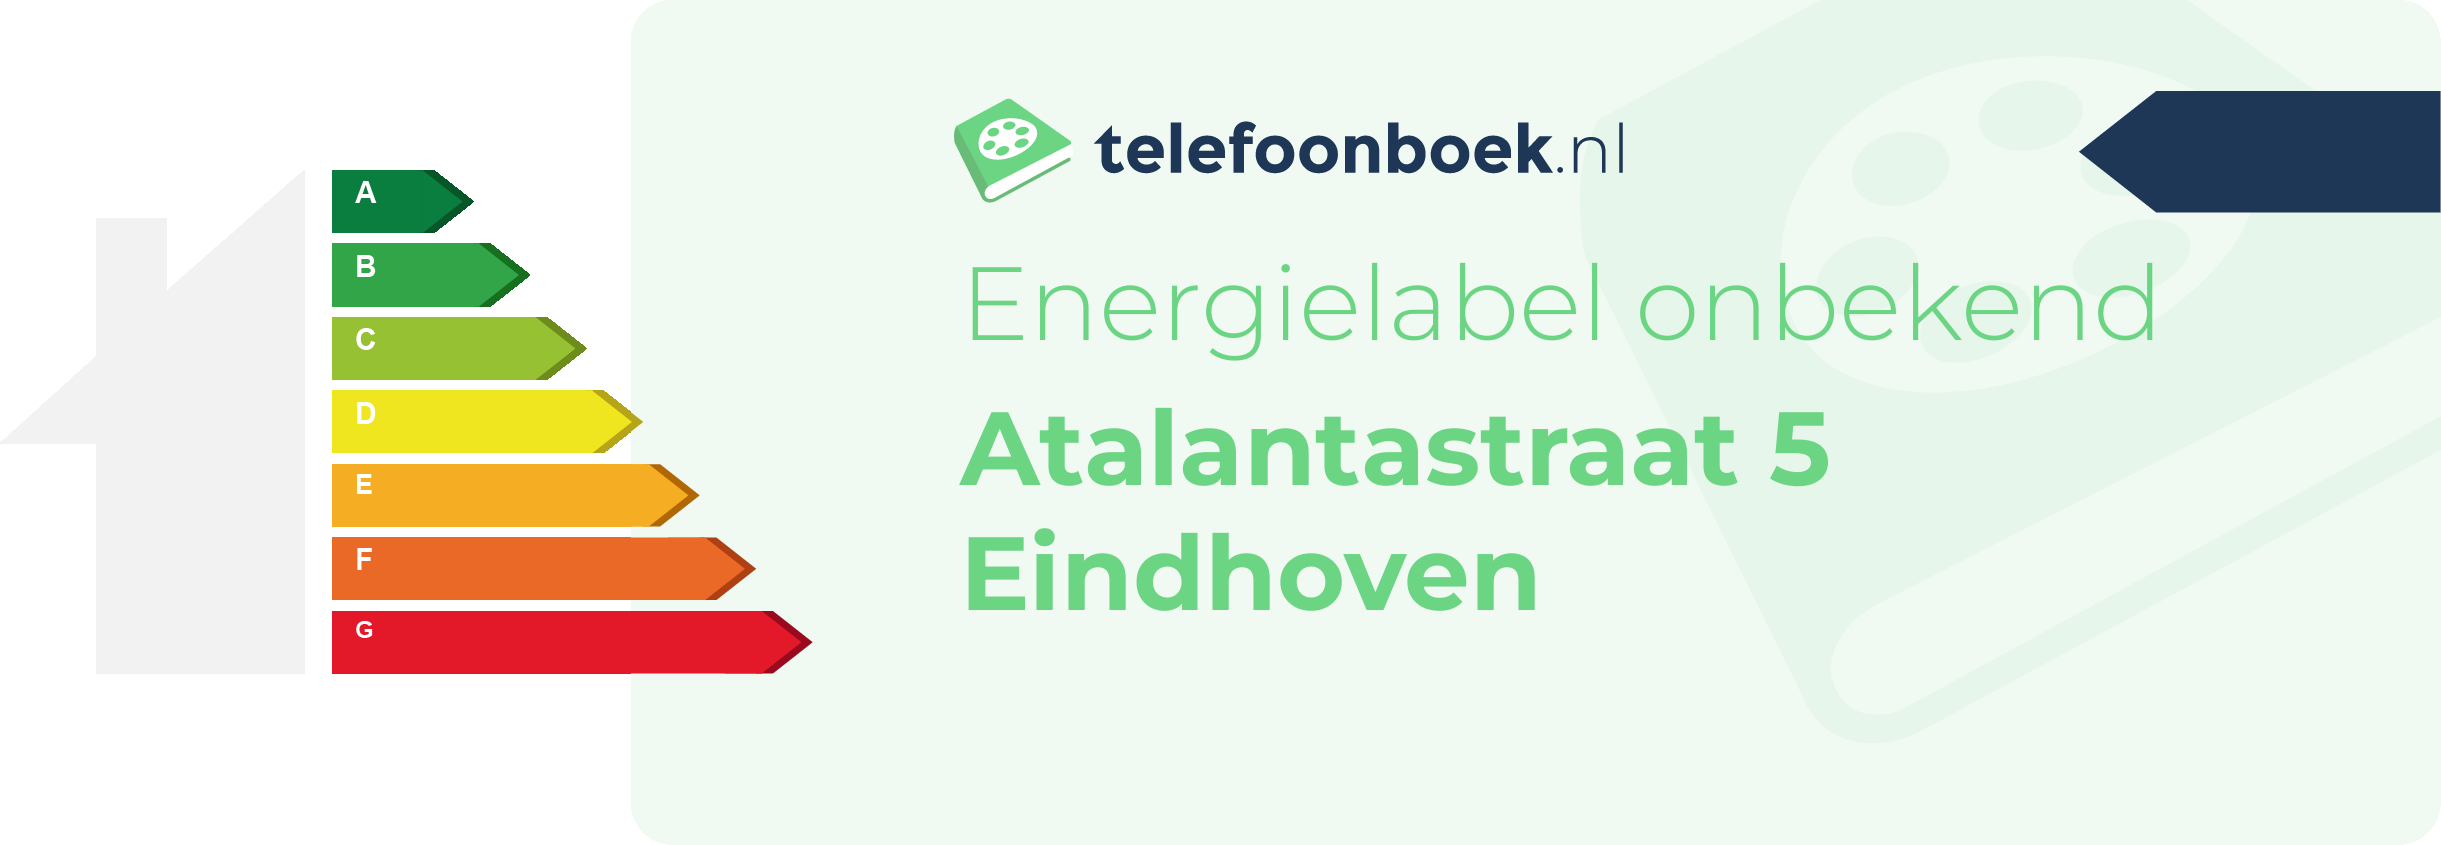 Energielabel Atalantastraat 5 Eindhoven